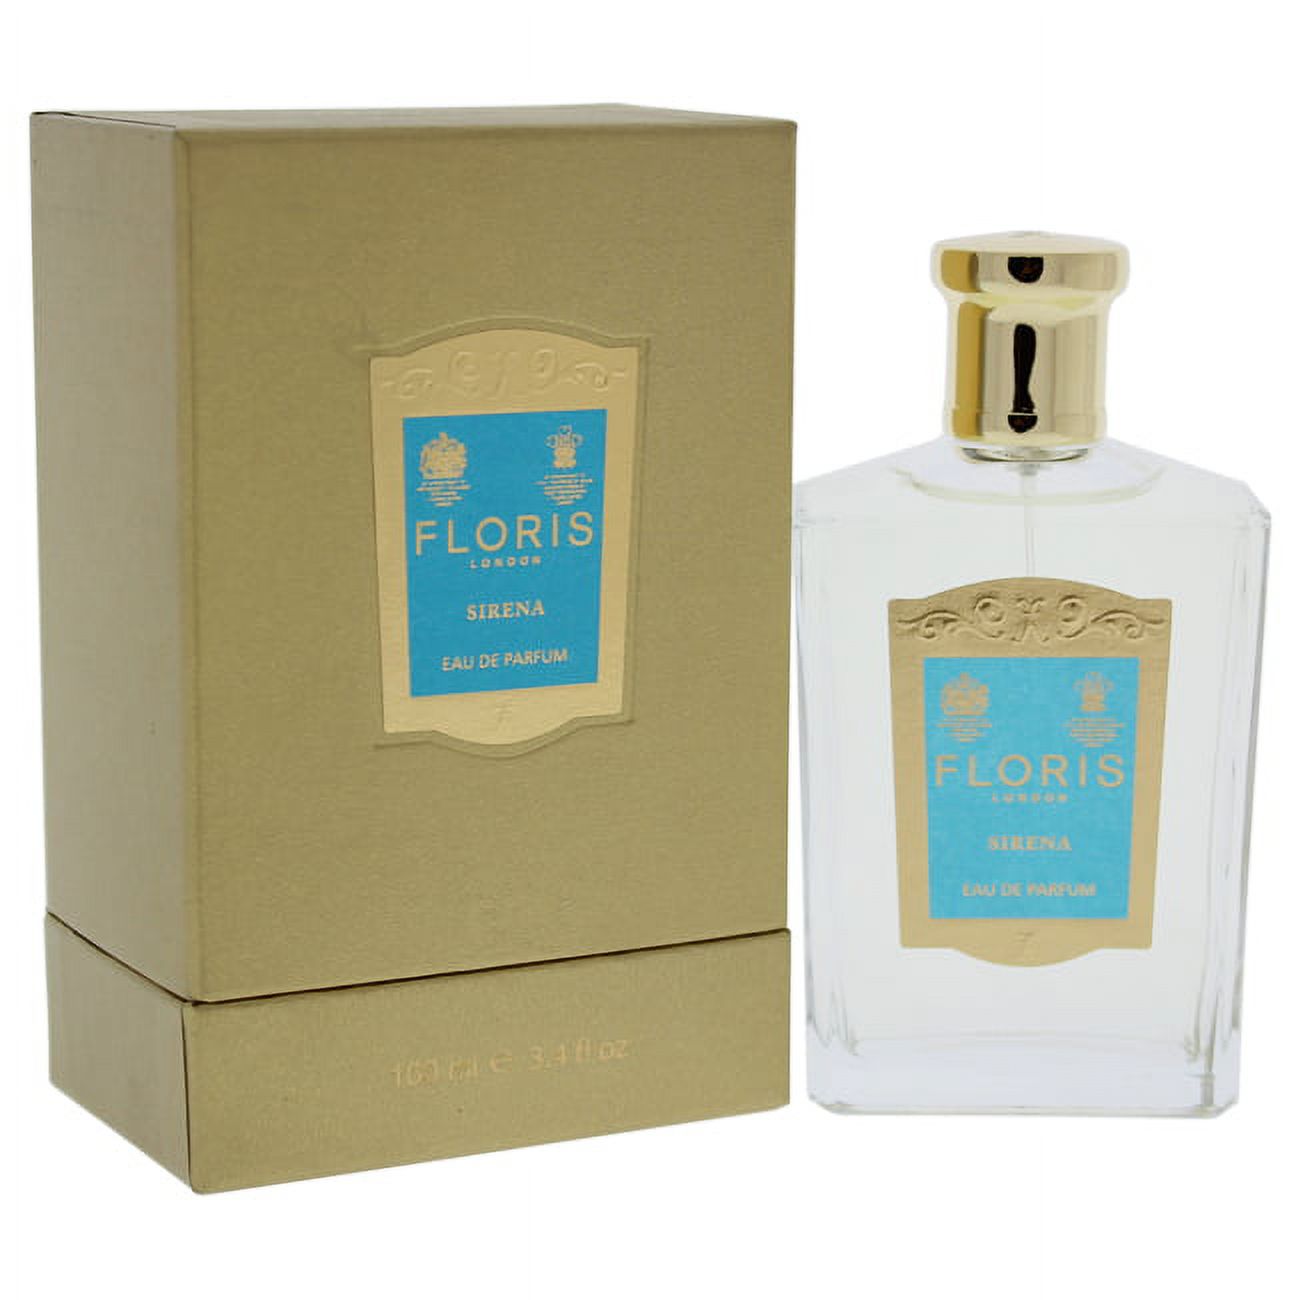 Floris London Sirena Eau de parfum Spray For Women 3.4 oz - image 1 of 2